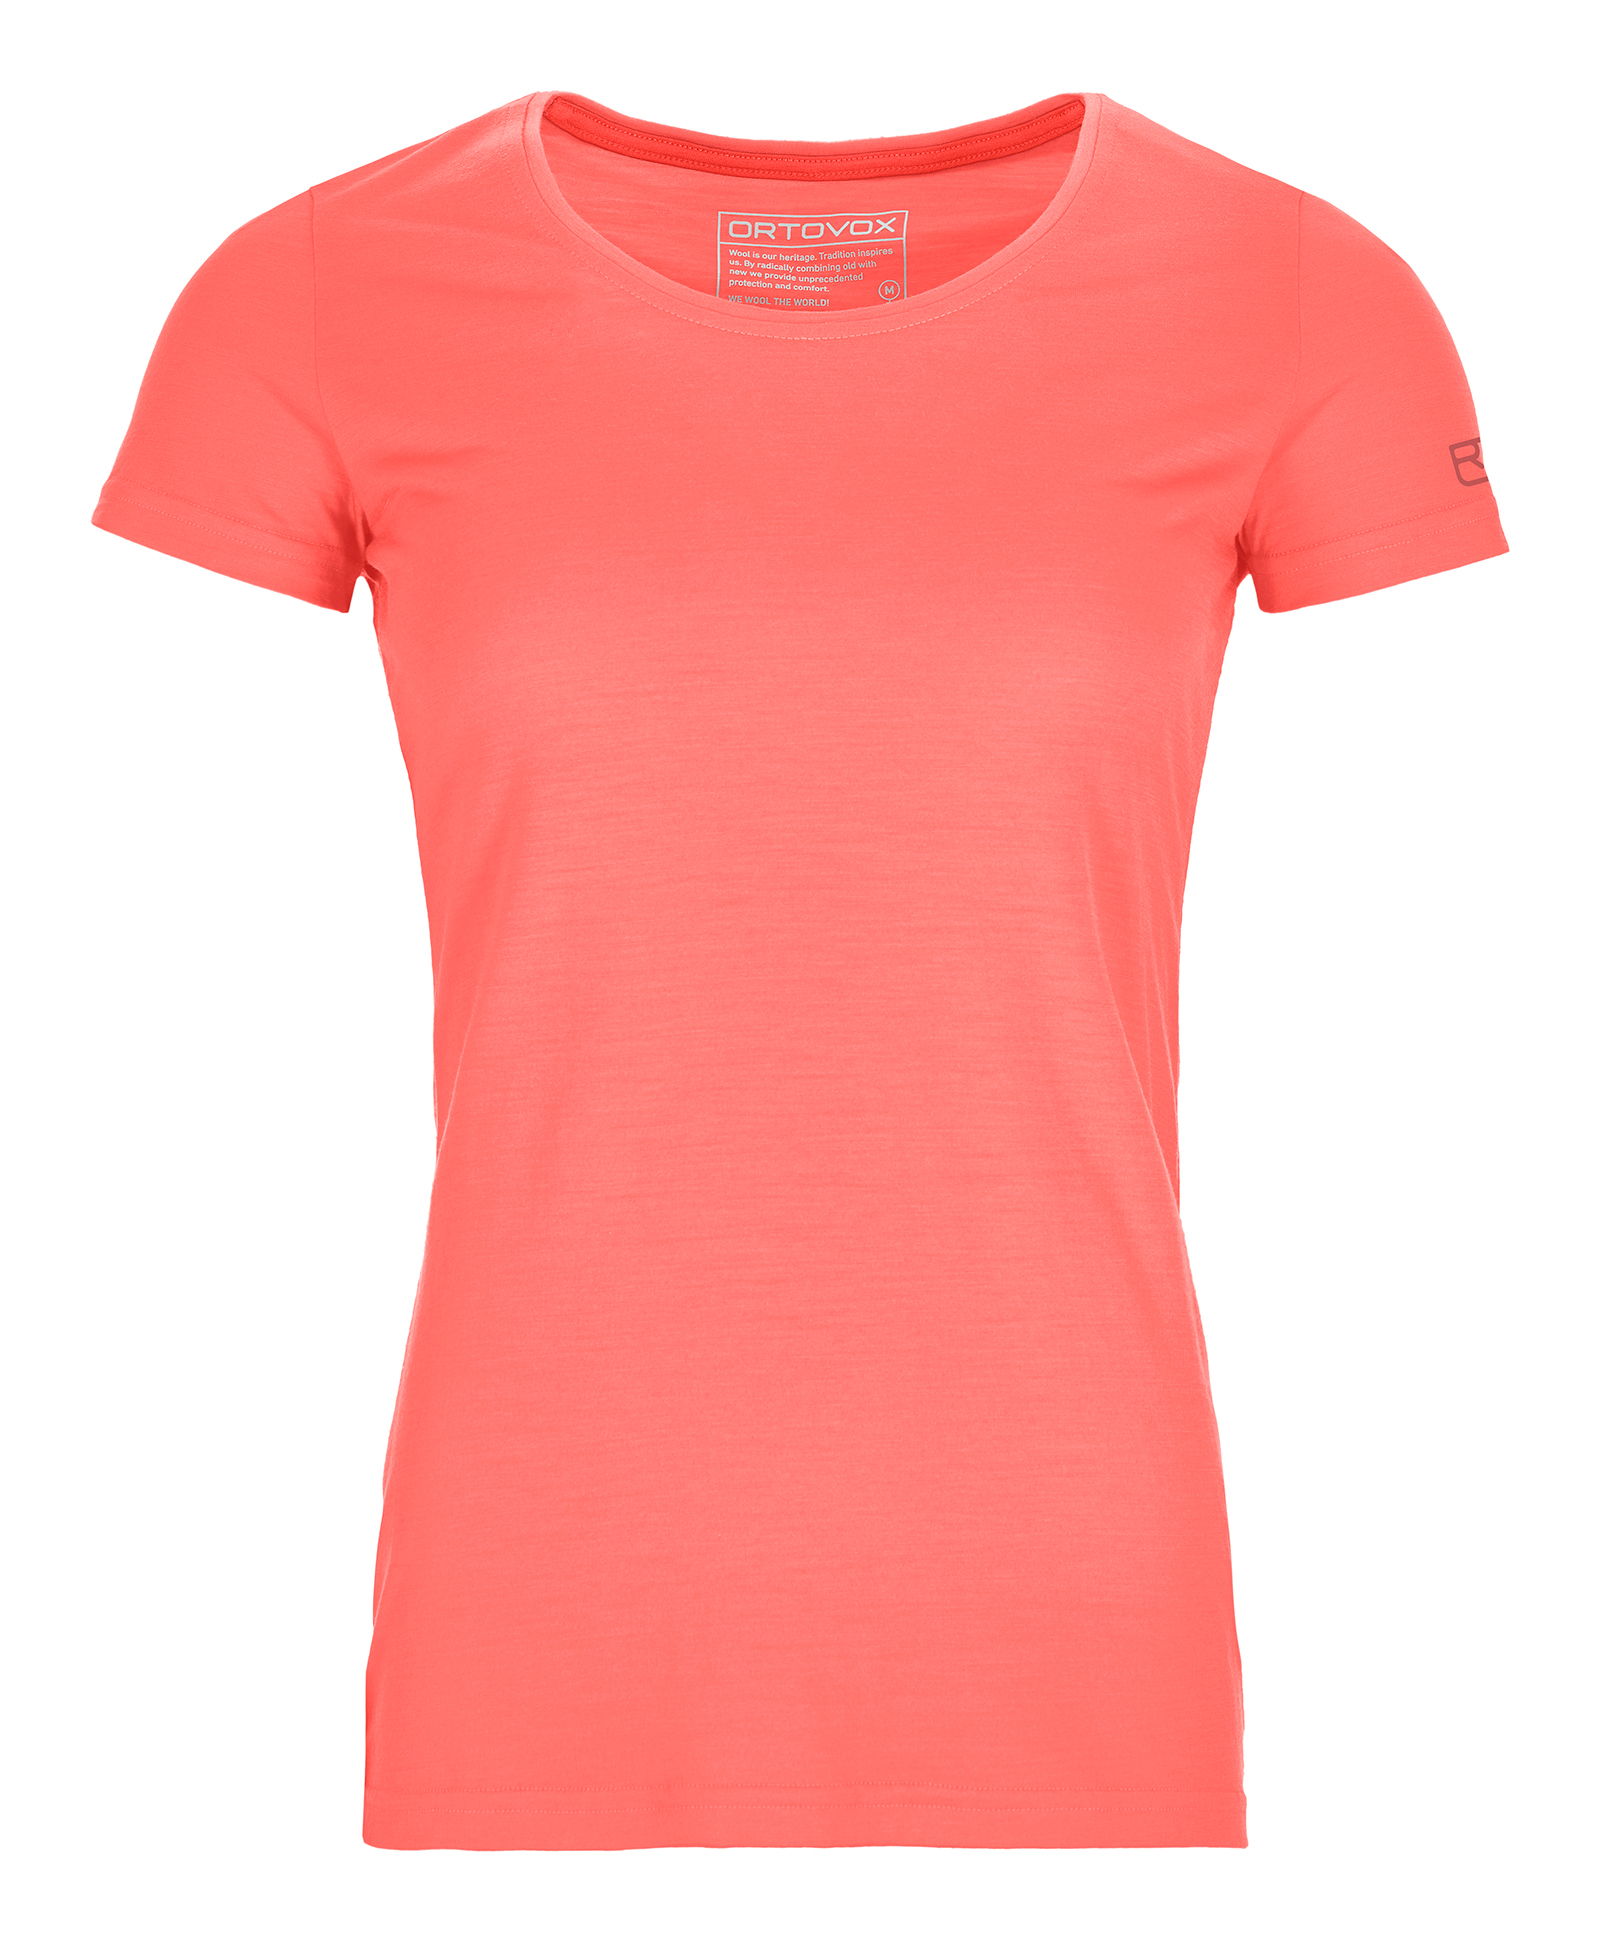 Ortovox 120 Cool Tec Clean TS - Camiseta lana merino - Mujer